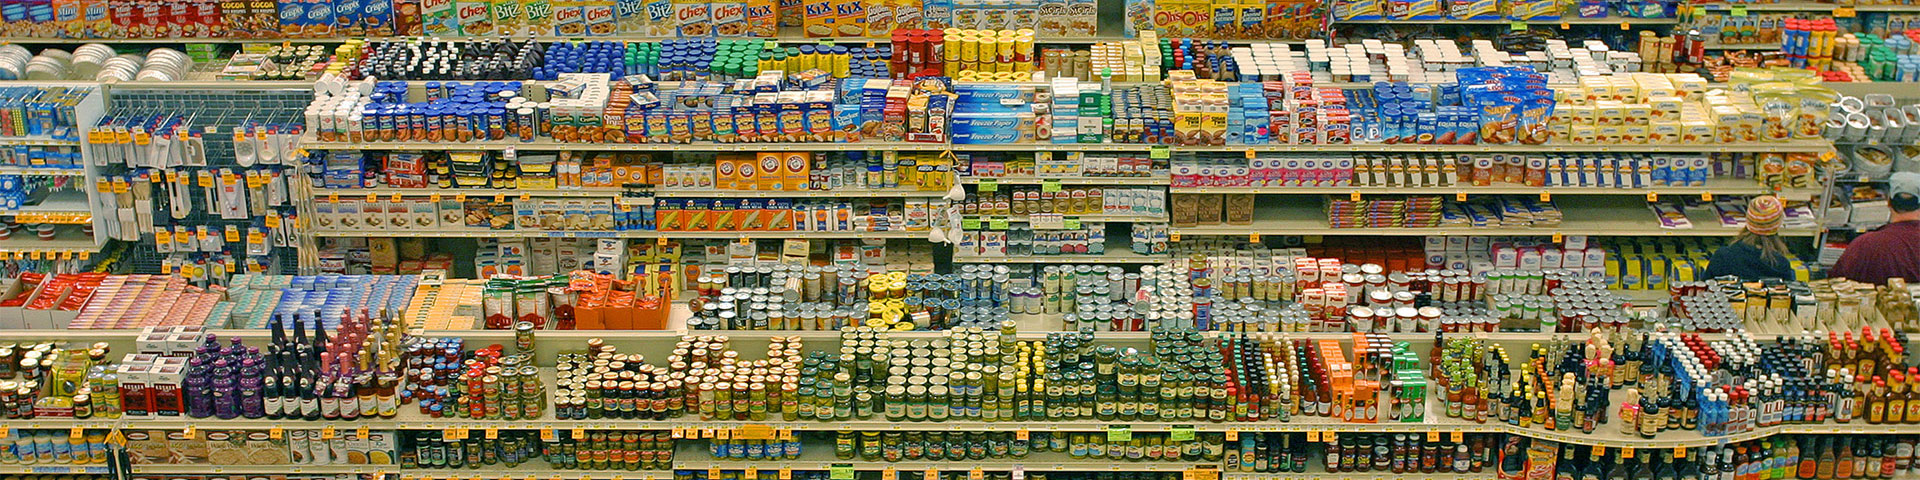 Shelves of a supermarket